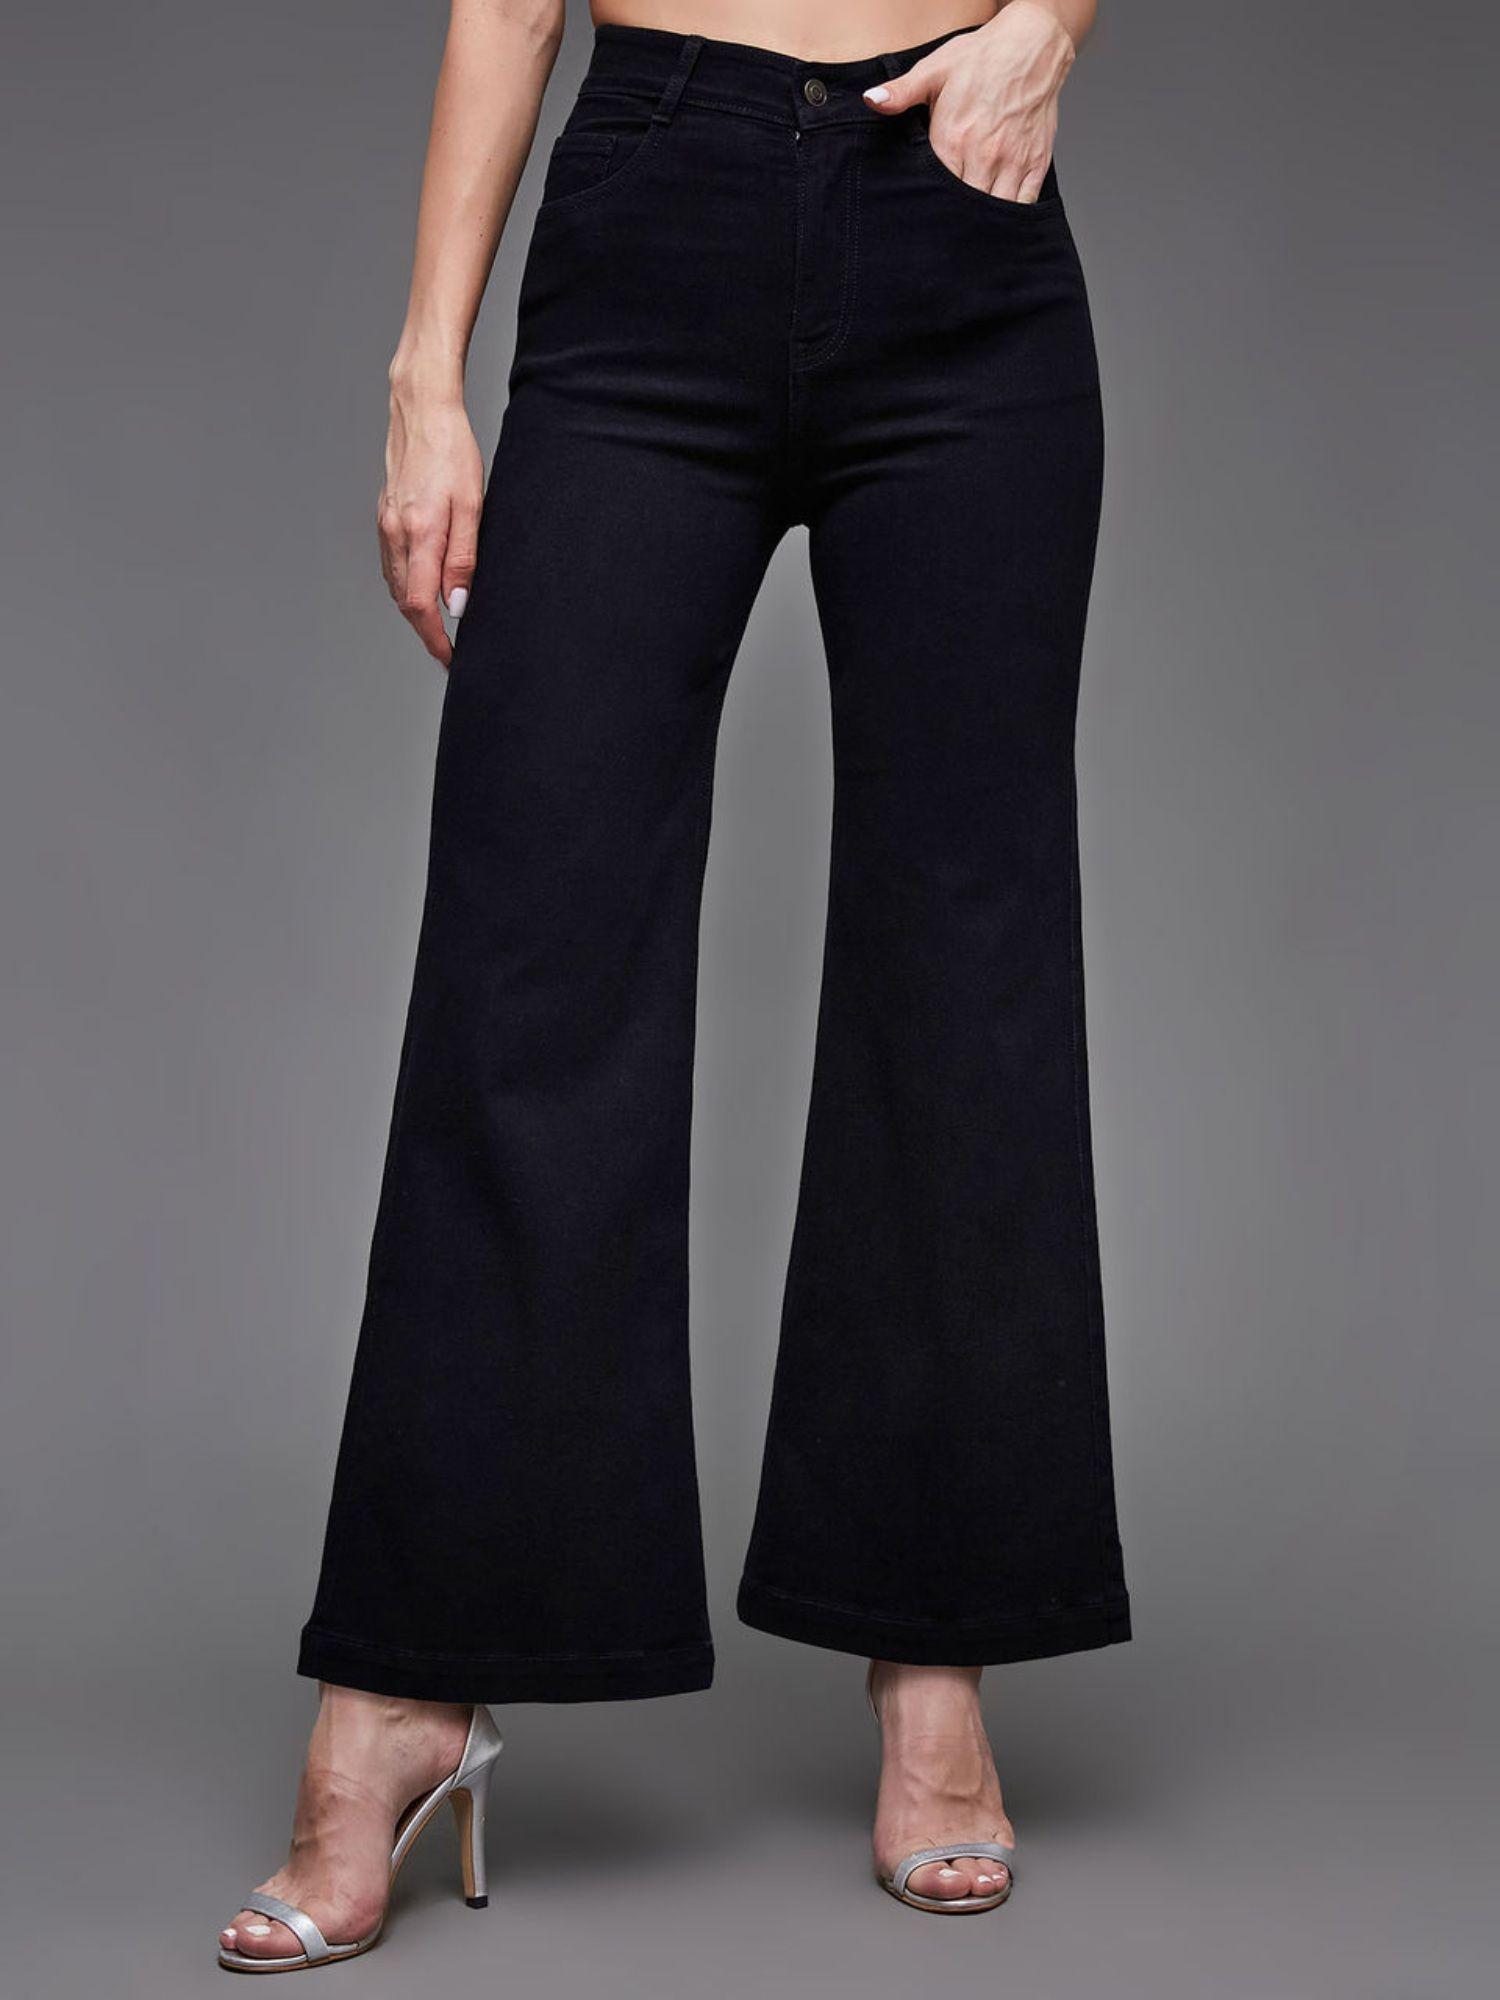 womens black wide leg high rise clean look stretchable denim jeans